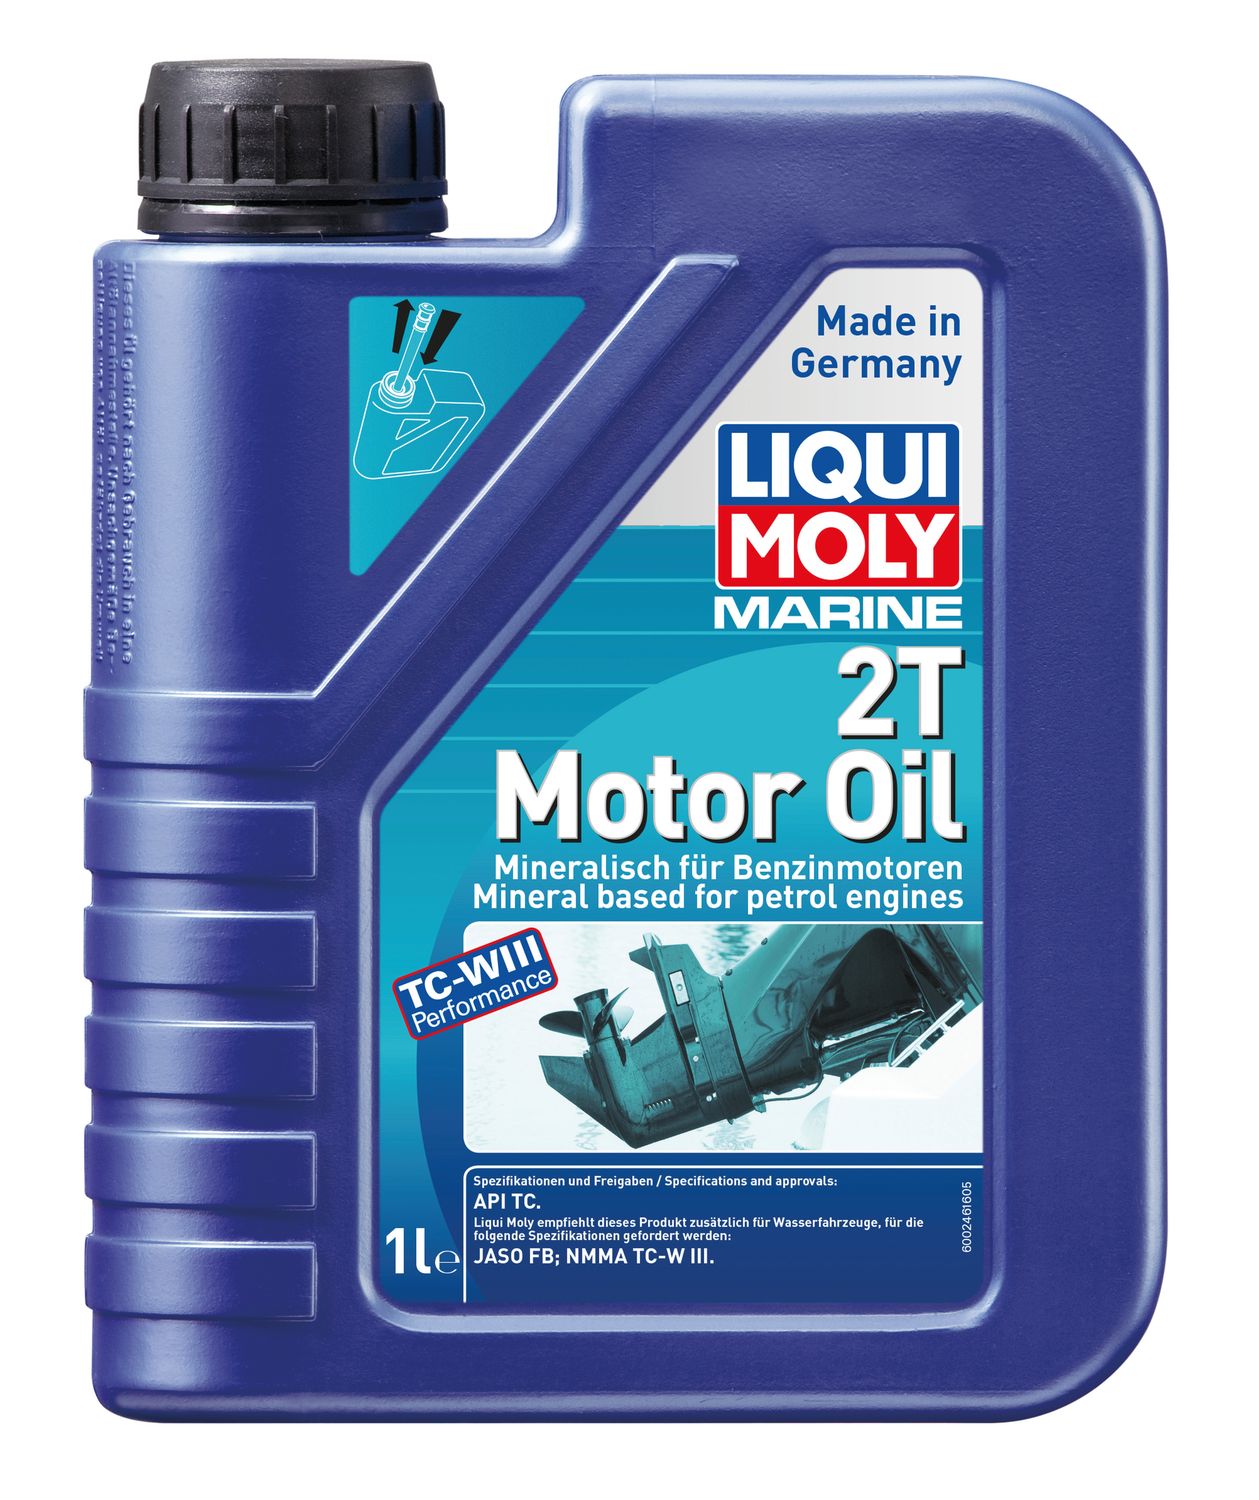 LIQUI MOLY Marine 2T Motor Oil